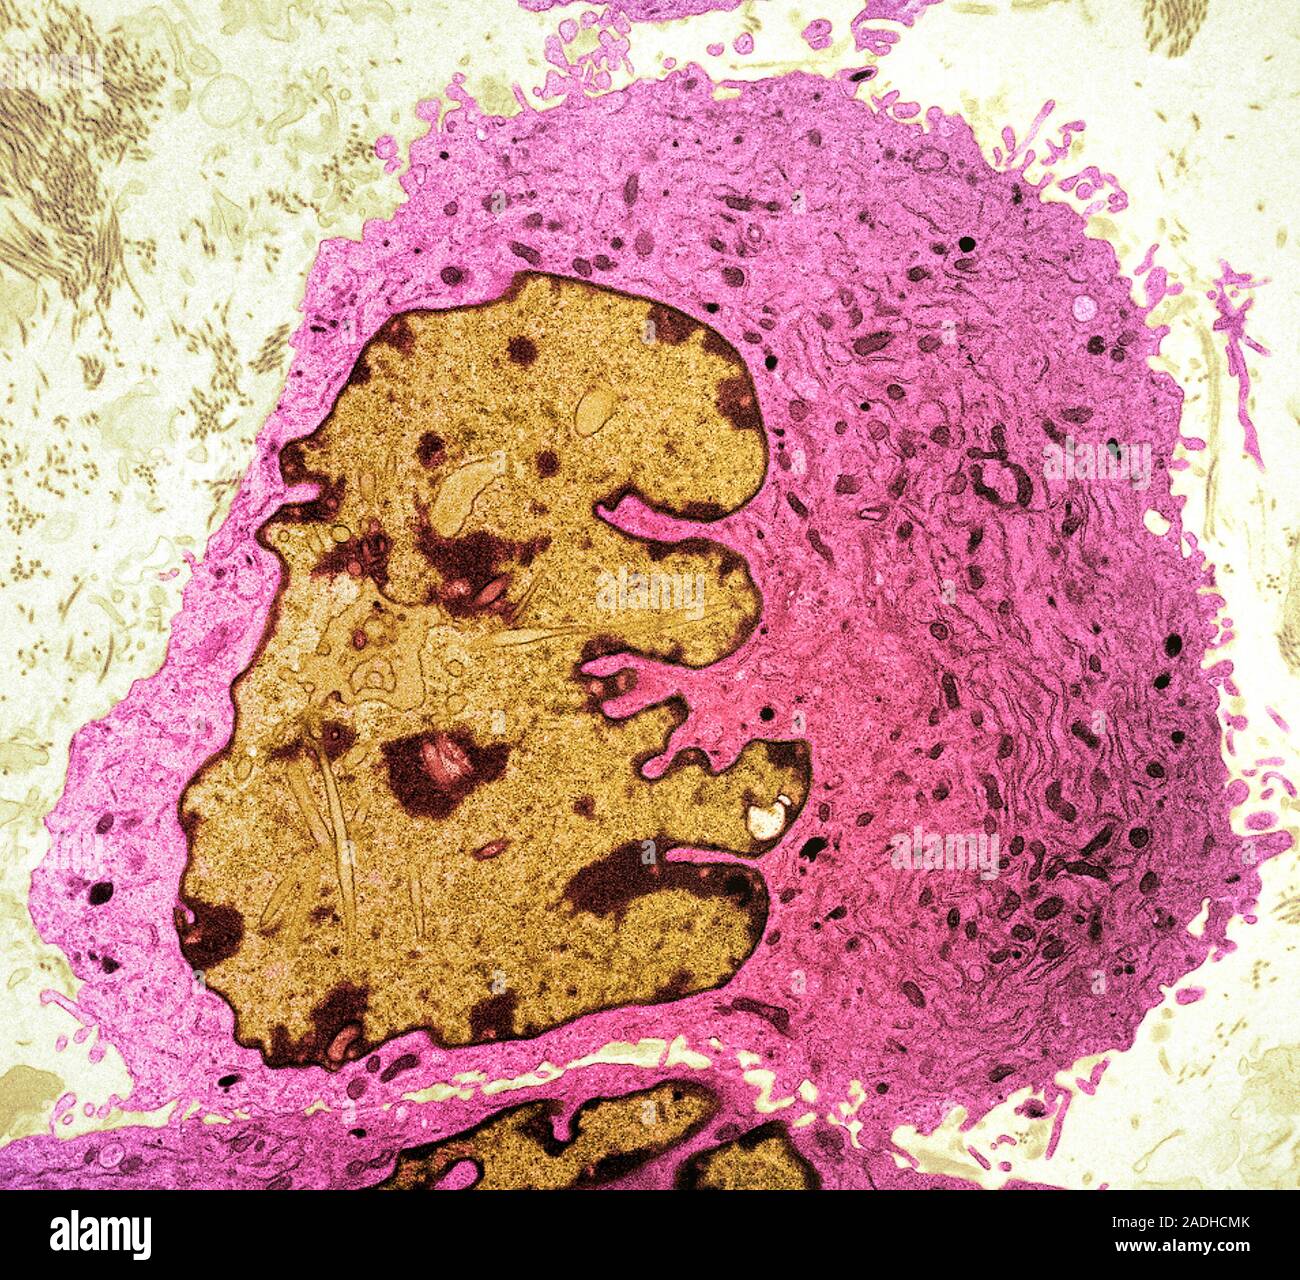 Sarcoma Cell Coloured Transmission Electron Micrograph Of A Sarcoma